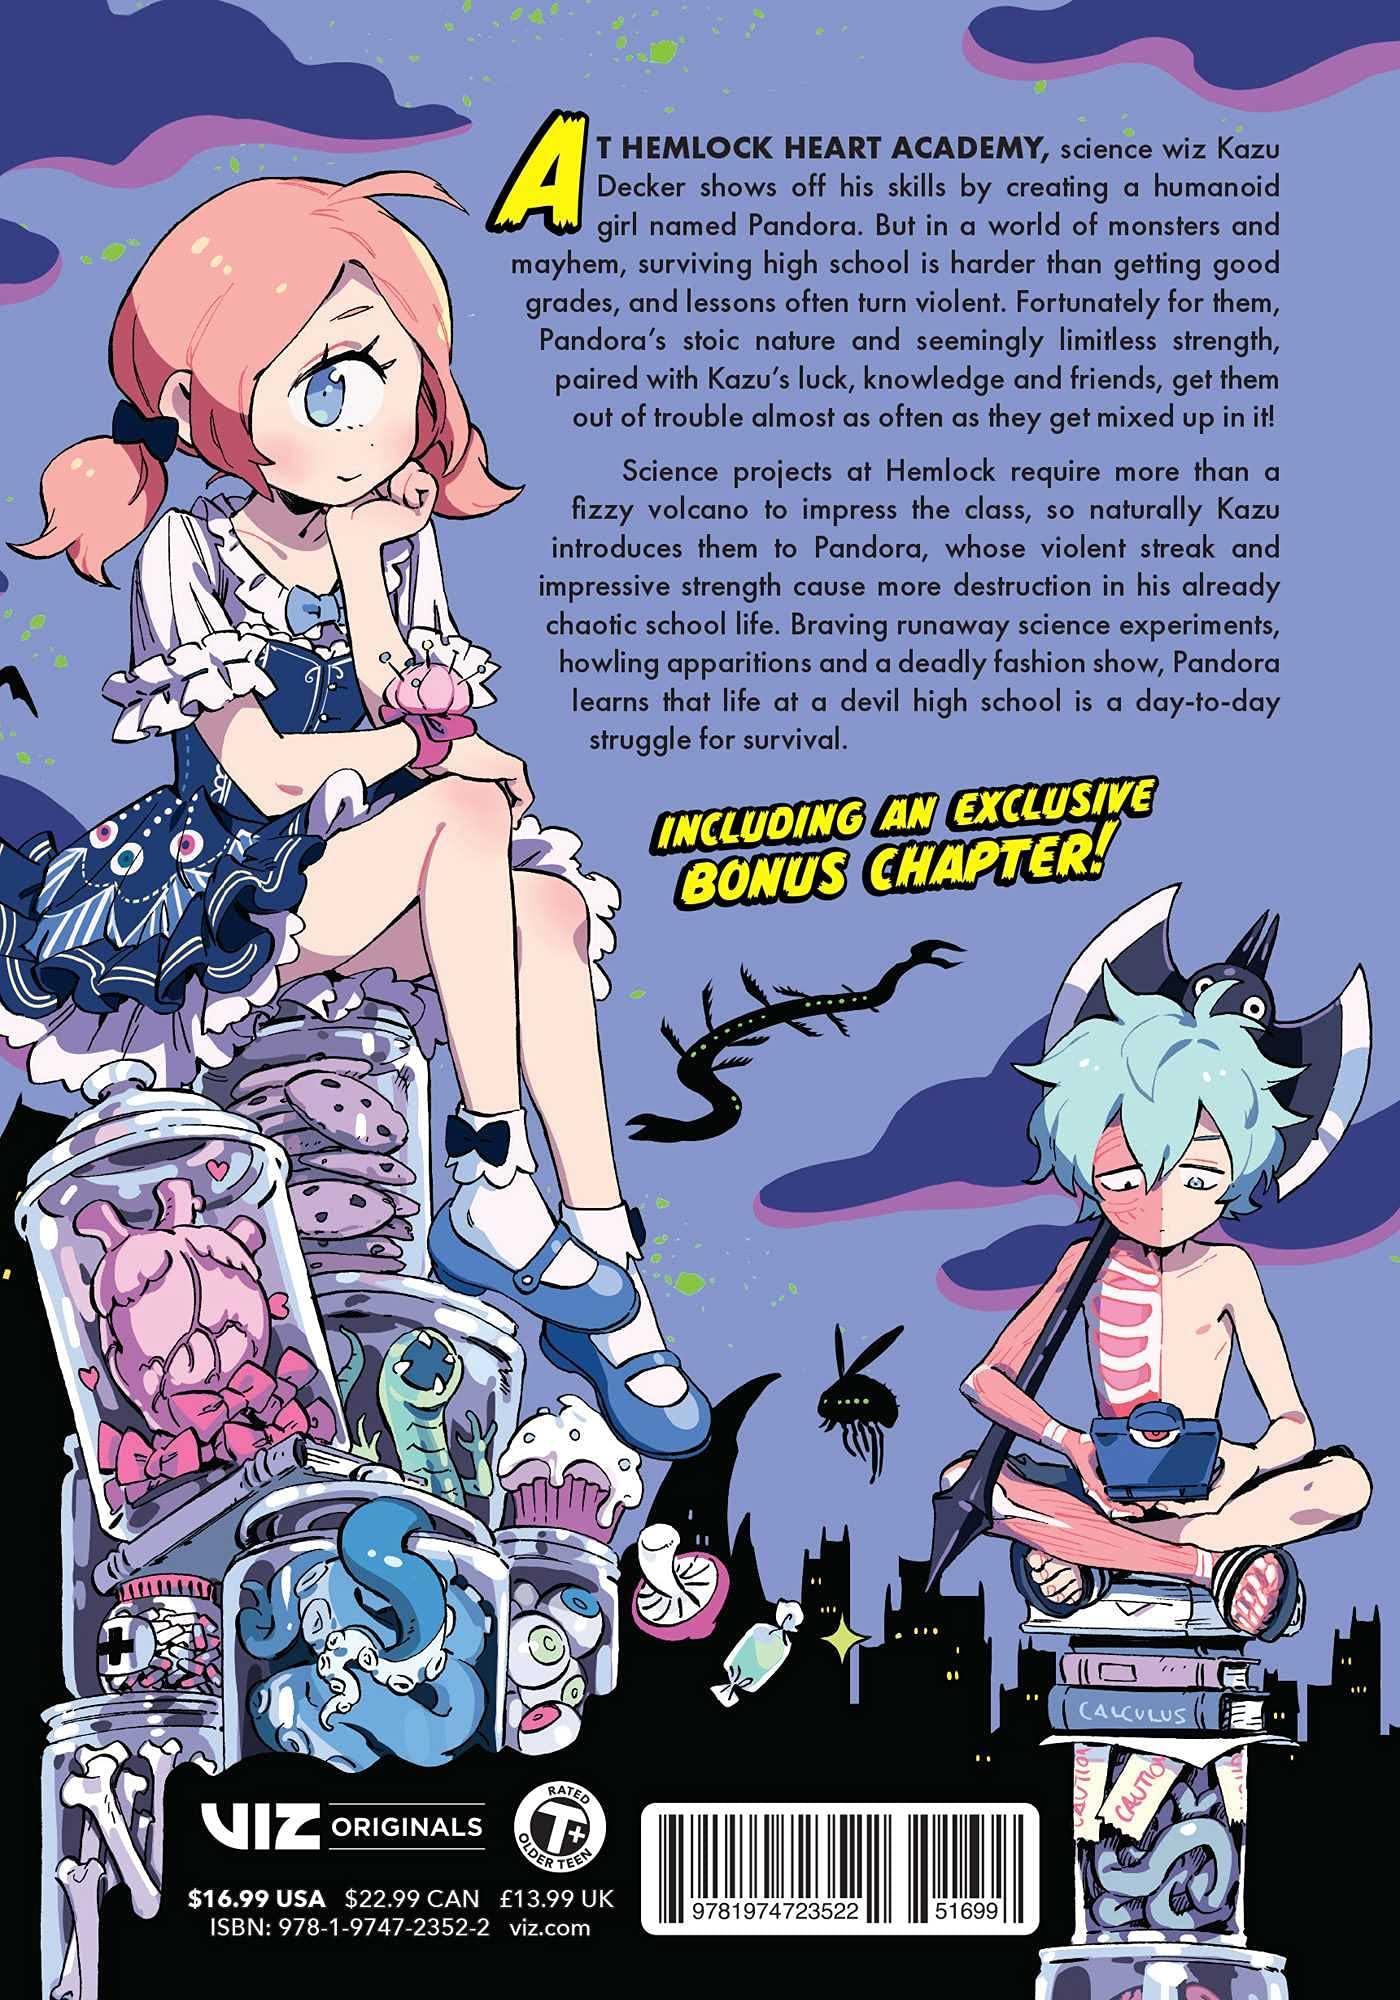 Devil's Candy (OEL Manga) Vol. 1 - Tankobonbon